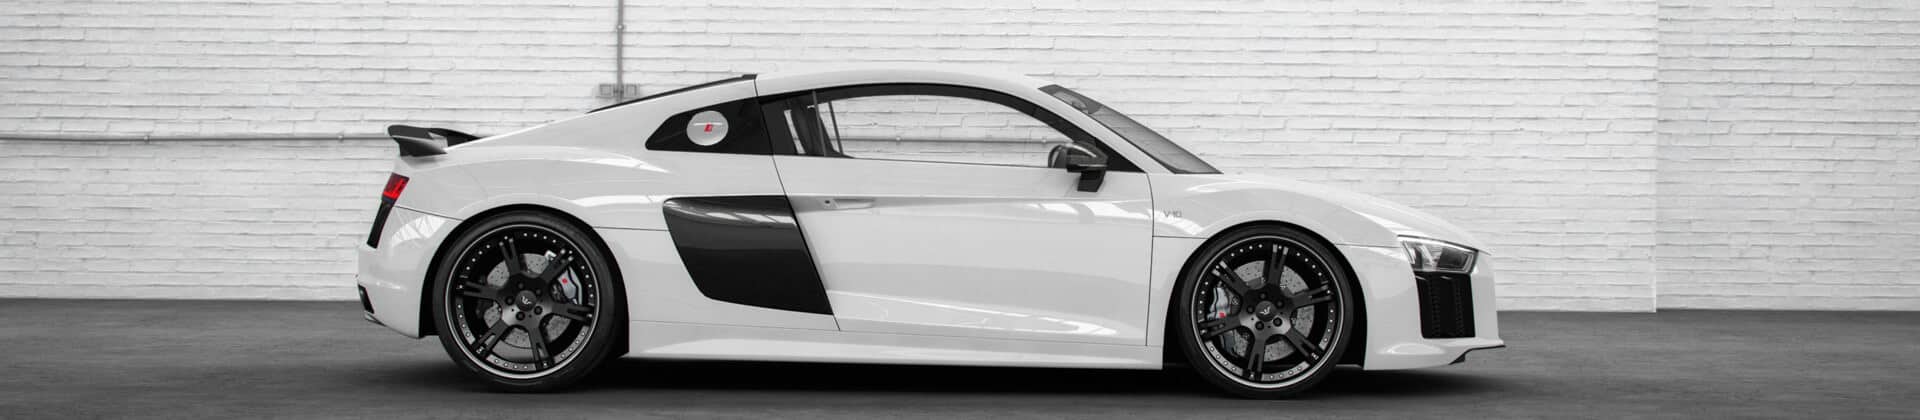 Audi R8 V10 exhaust